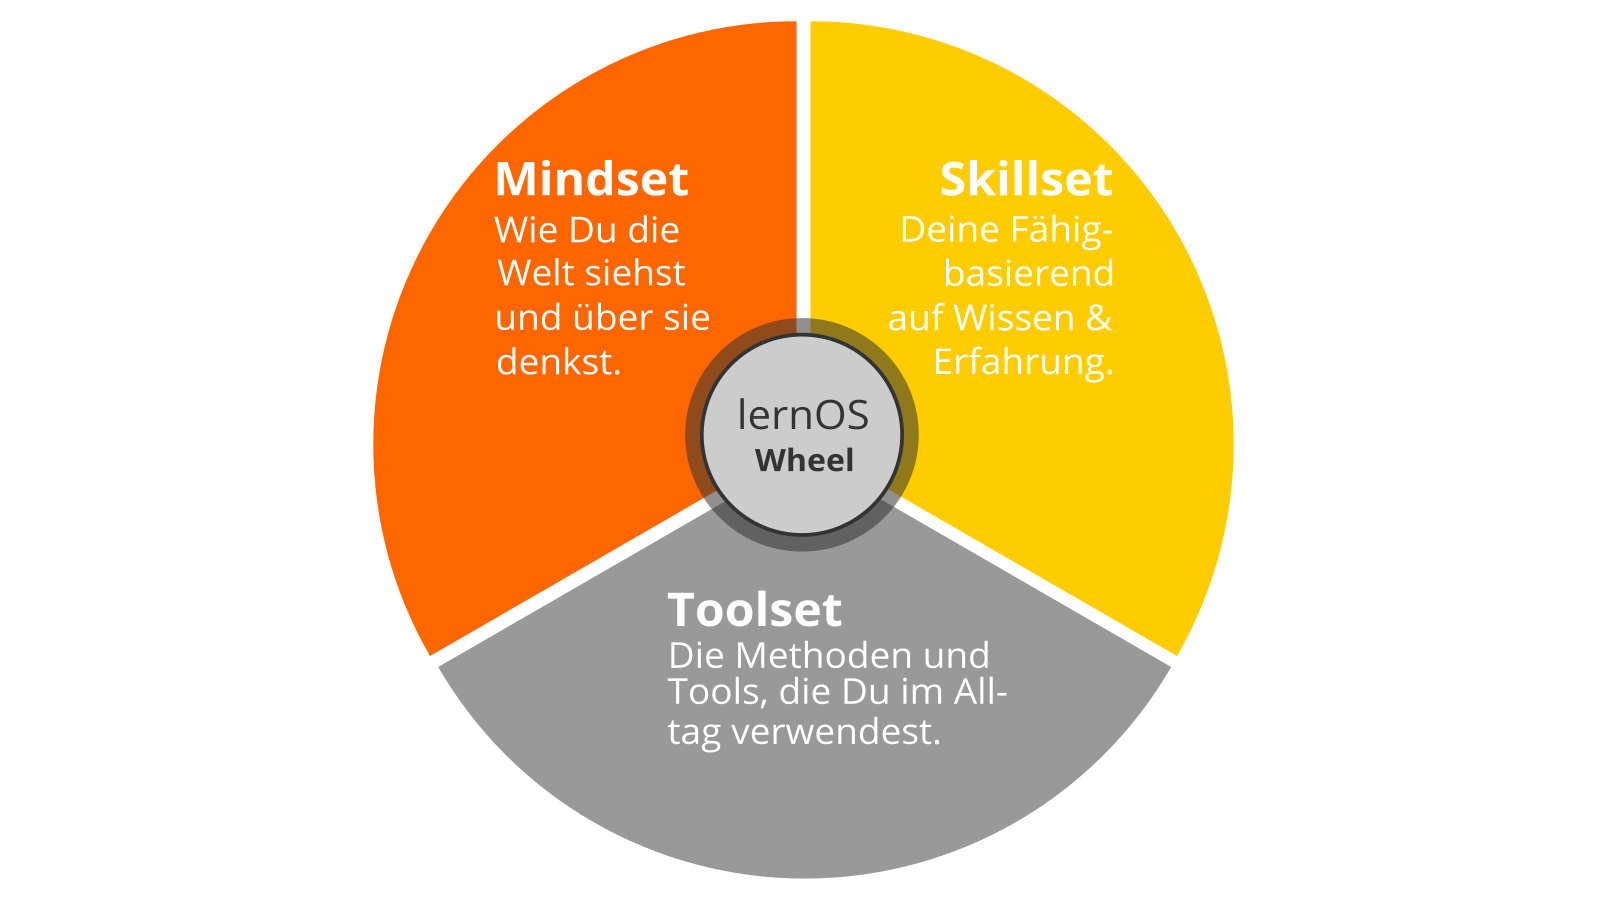 lernOS Wheel von @simondueckert, CC BY 4.0